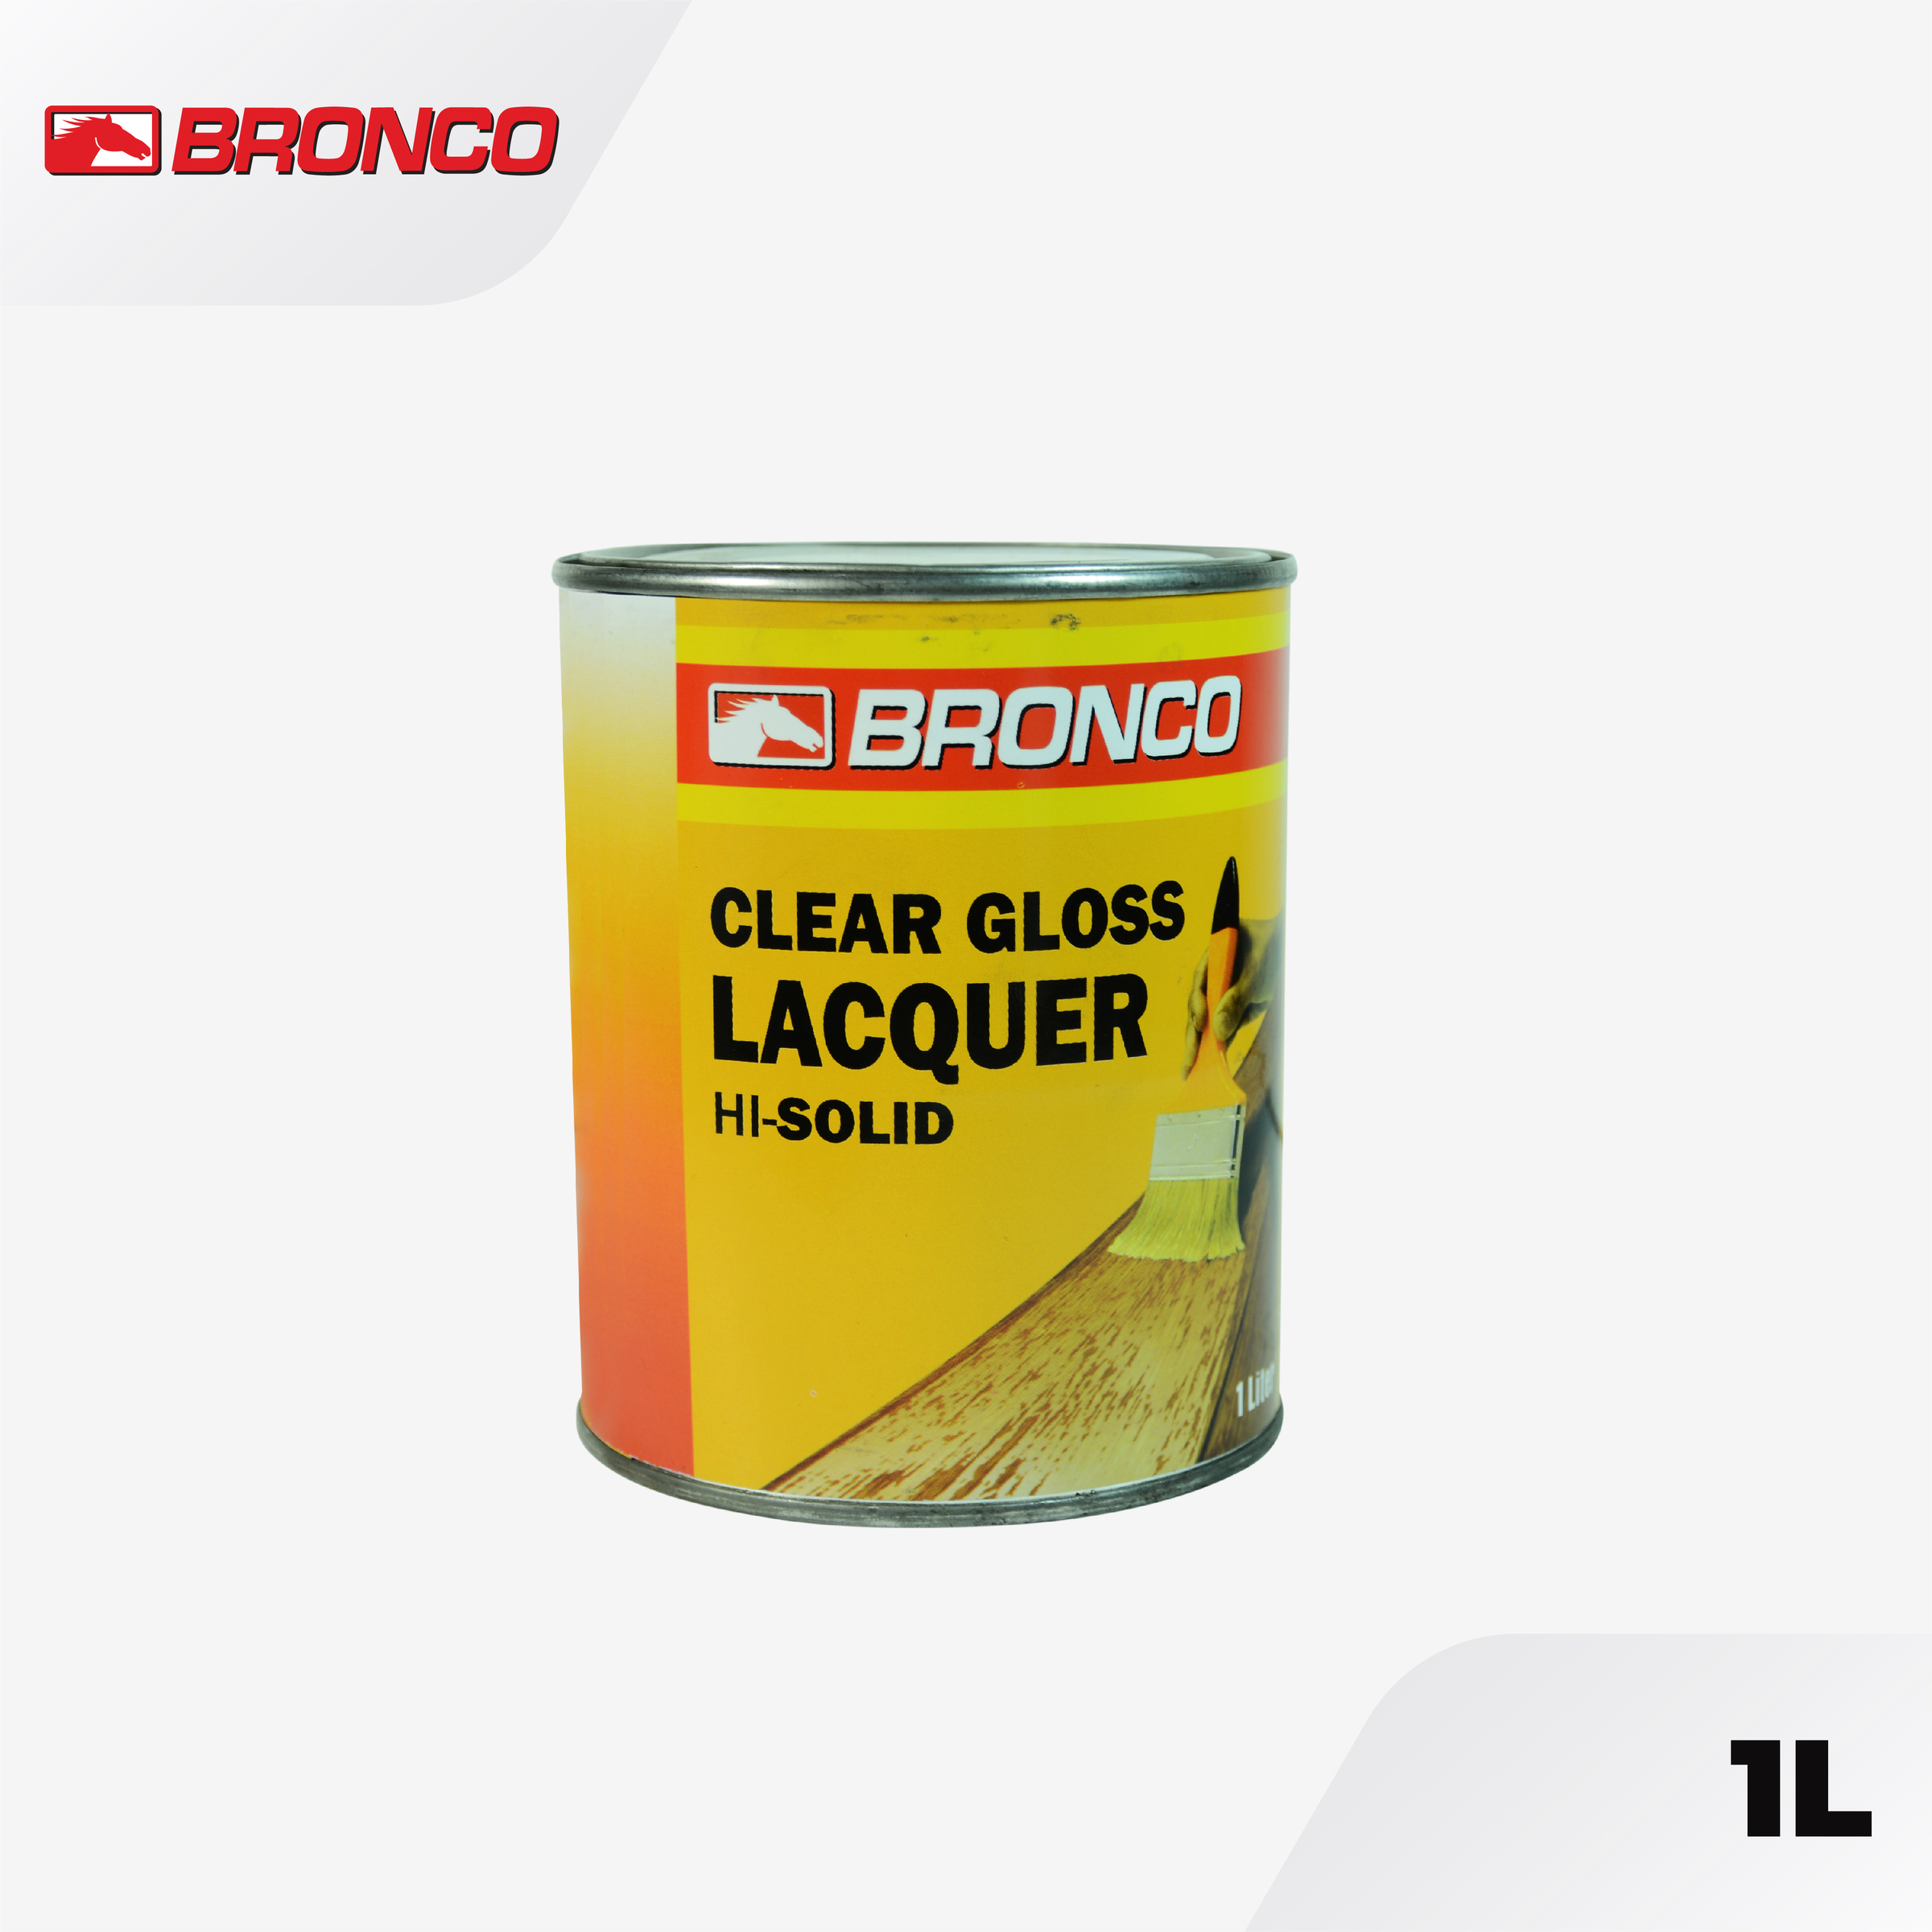 Bronco Clear Gloss Lacquer 1L